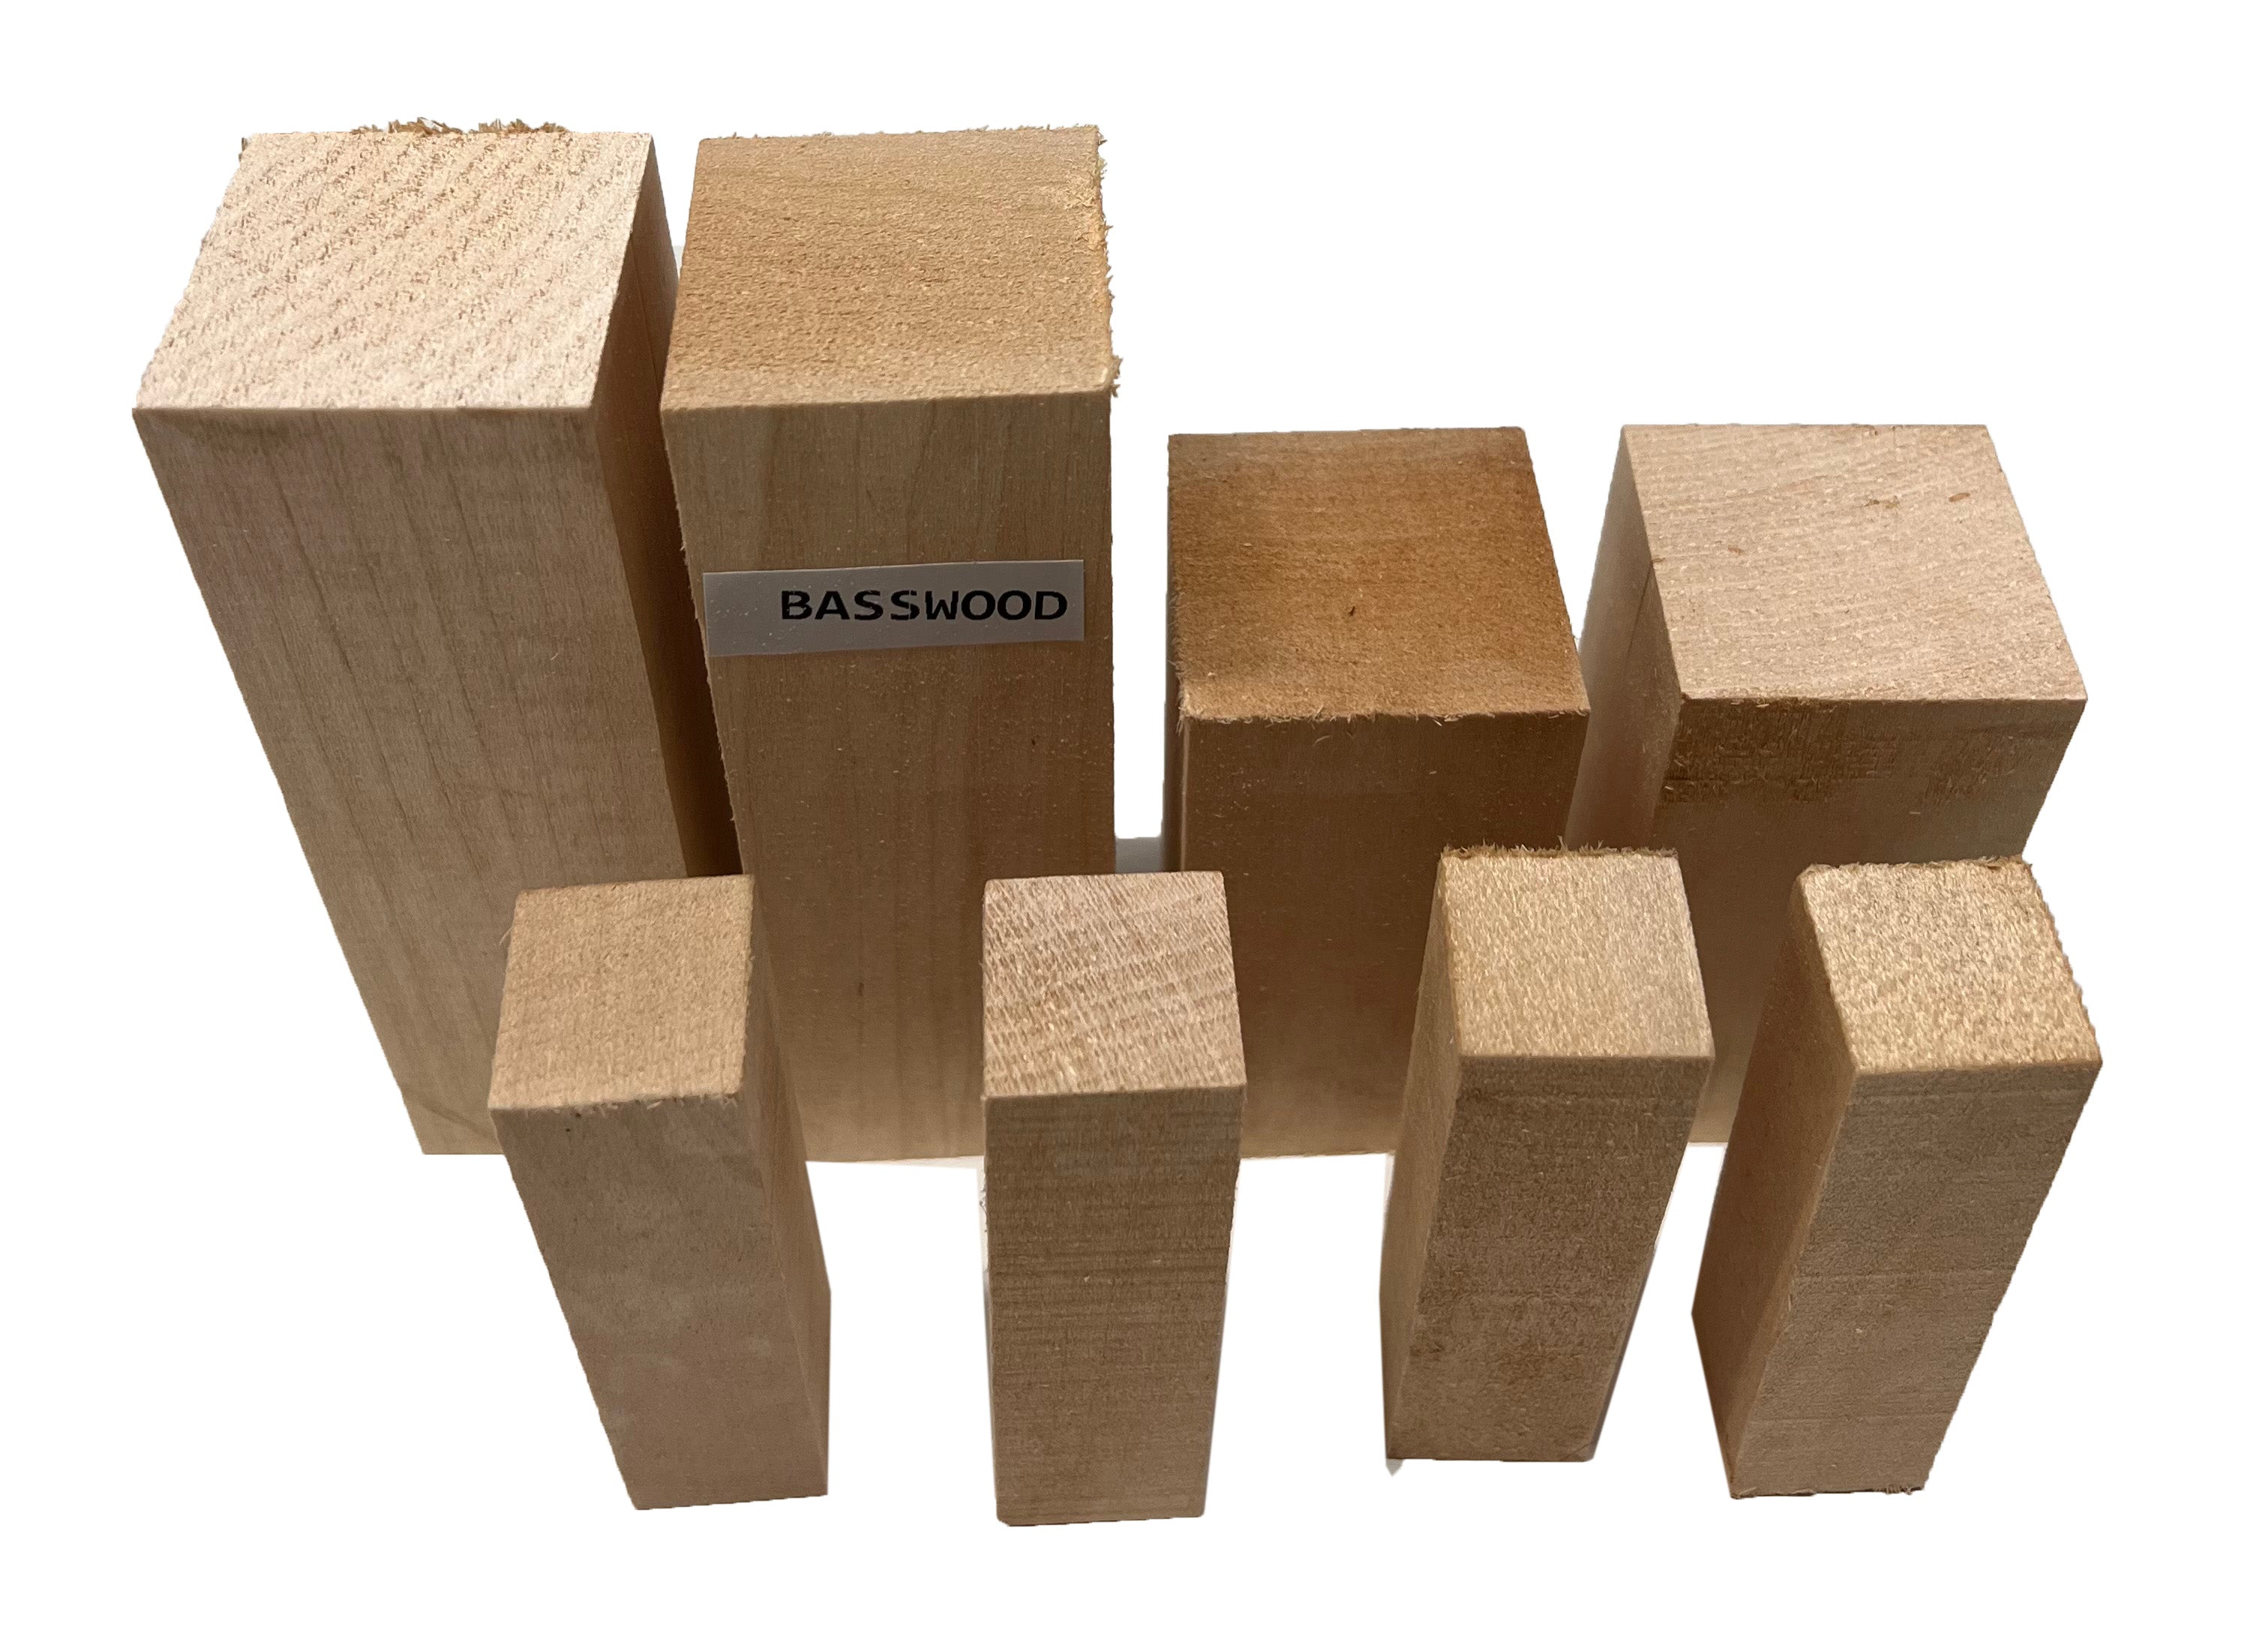 Listones de madera de tilo para tallar (2 listones 21 x3 x 3 cm)